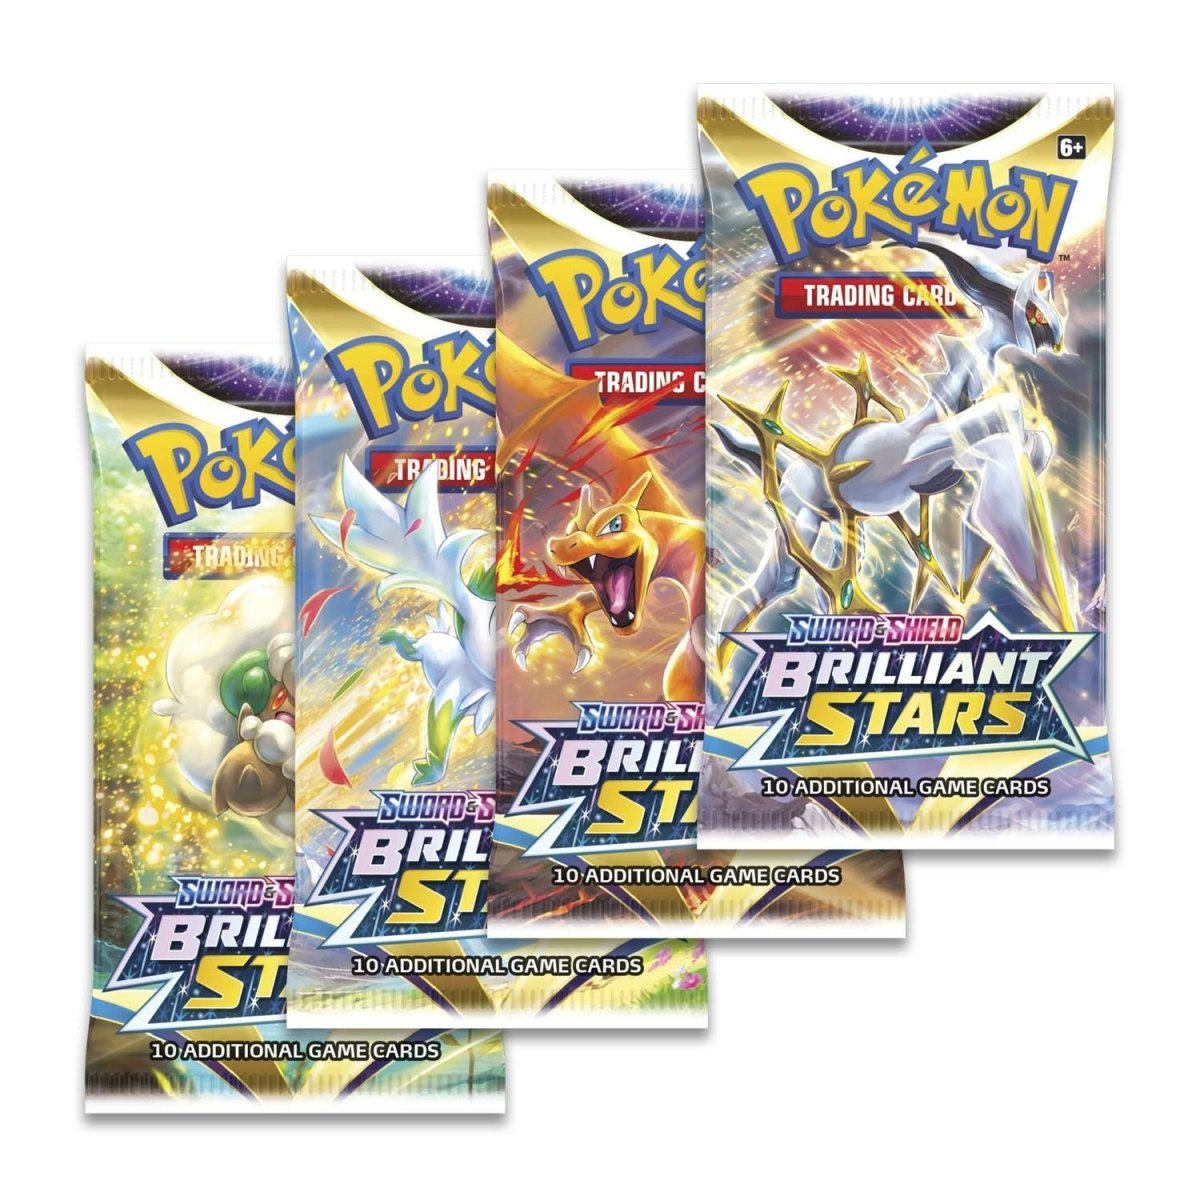 Pokémon TCG: Sword & Shield - Brilliant Stars Booster Box - PokeRvm